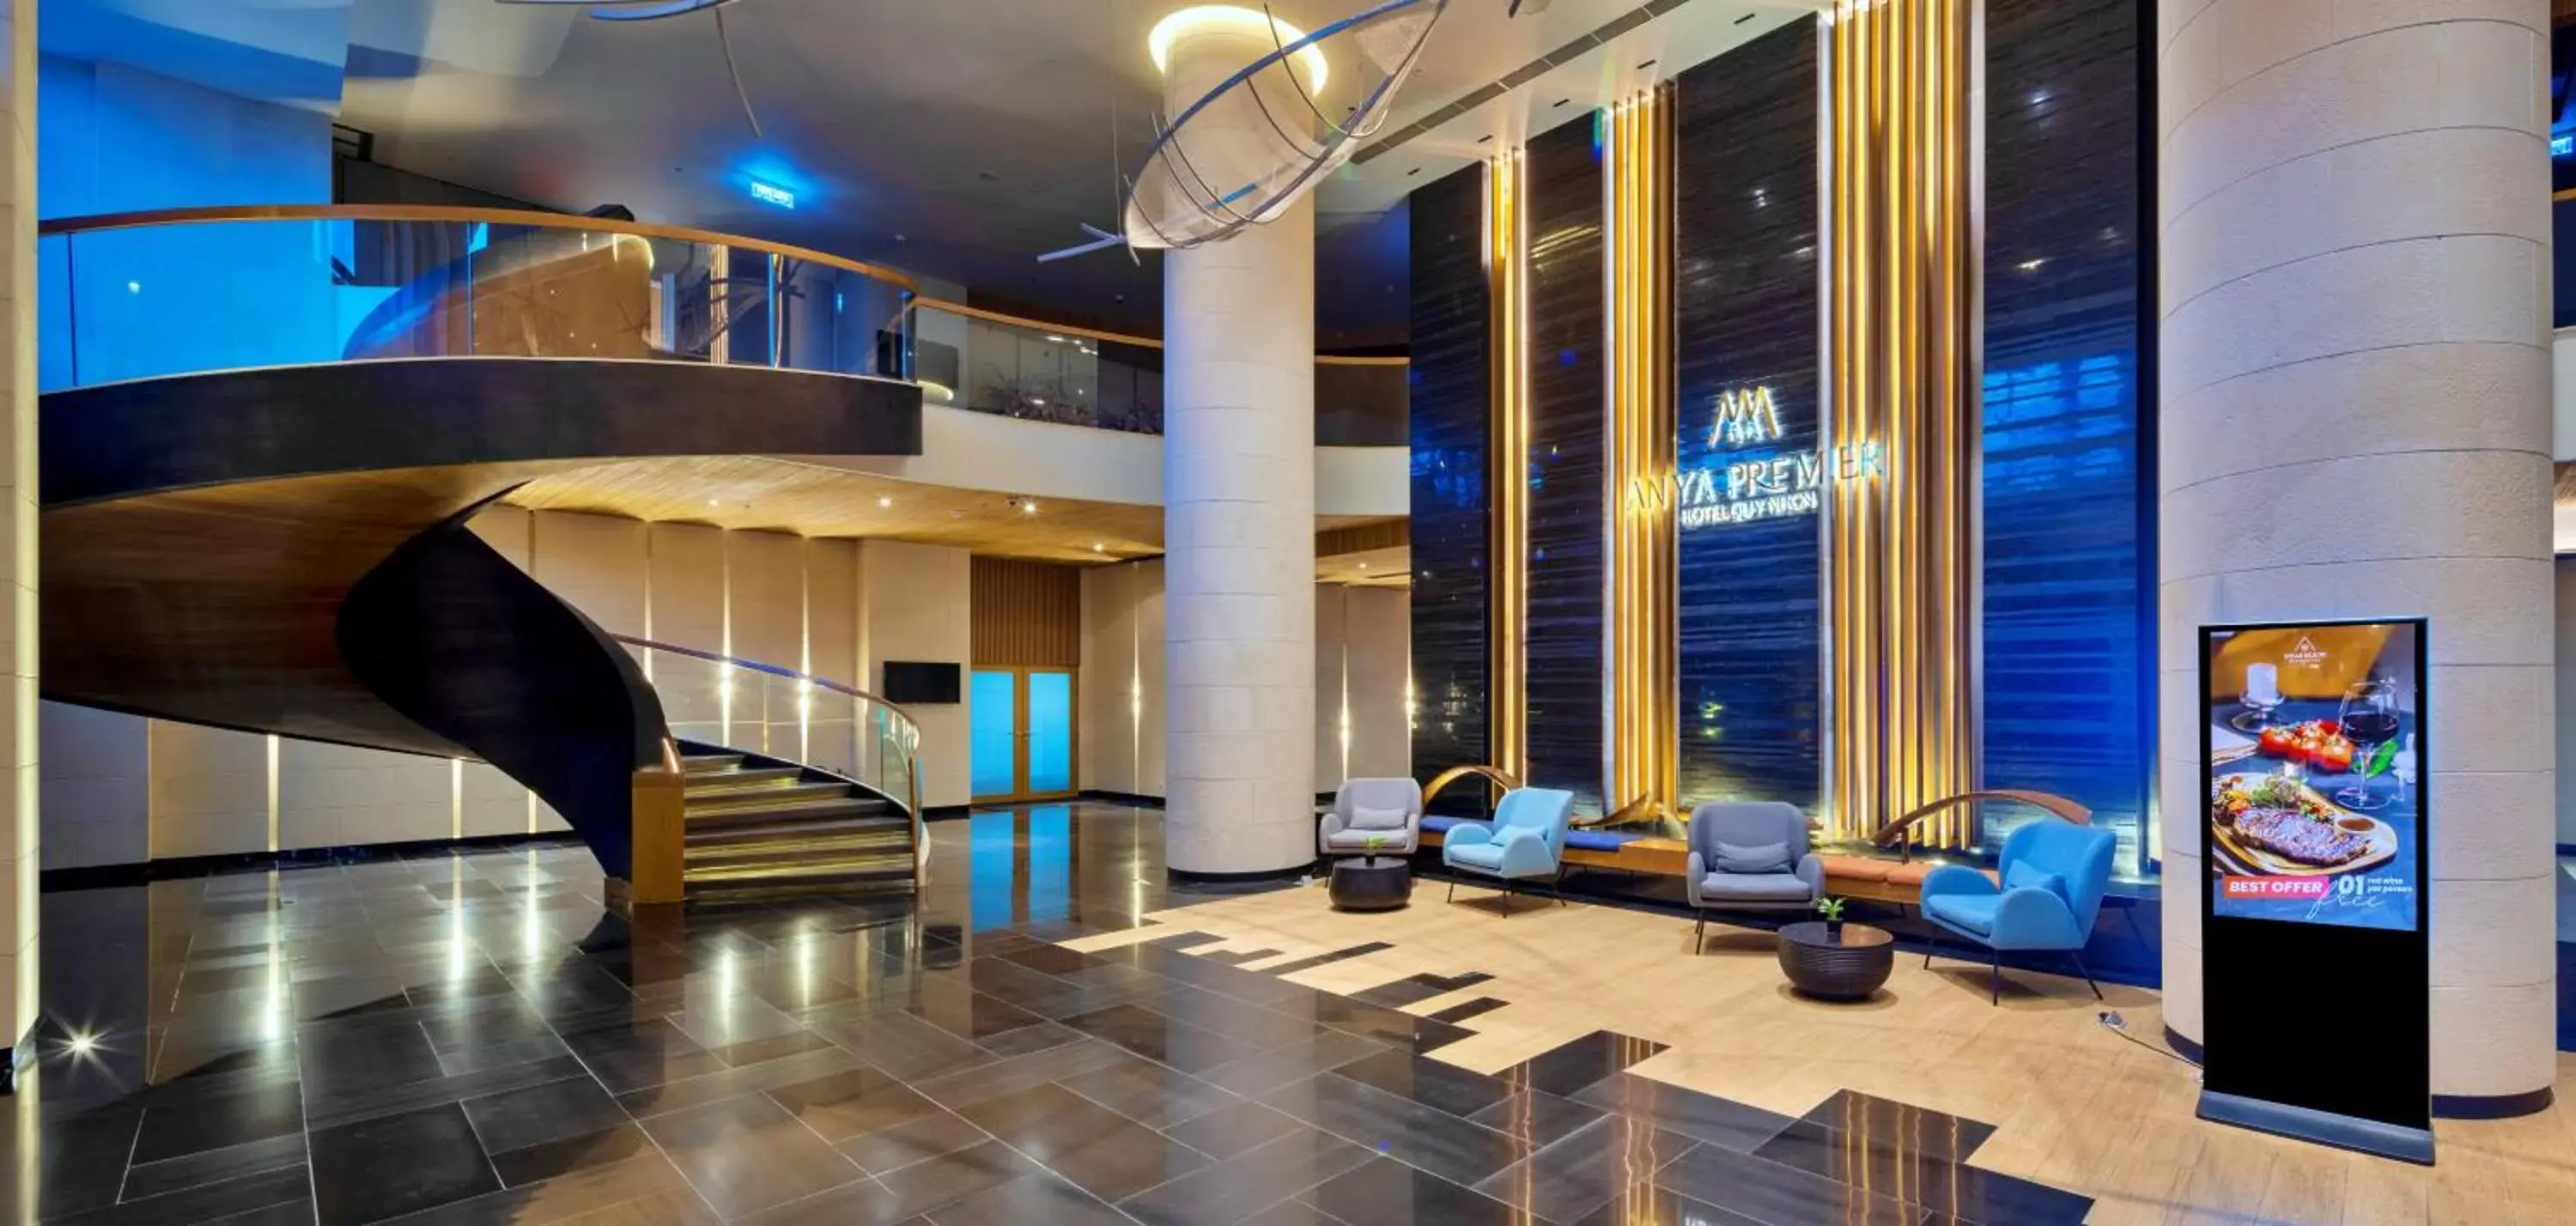 Lobby or reception in Anya Premier Hotel Quy Nhon